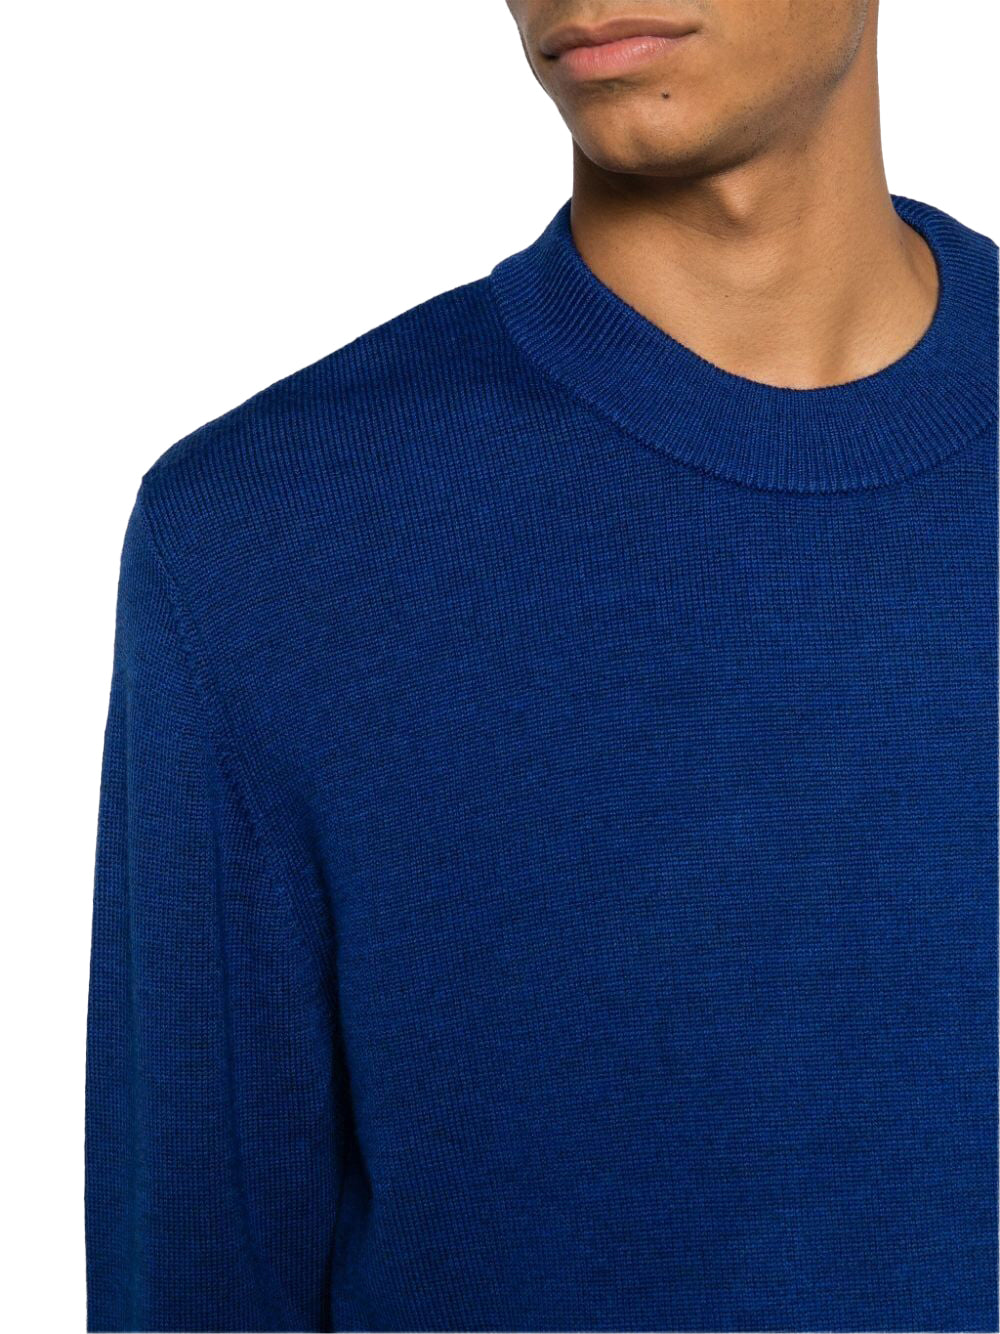 Moon blue sweater